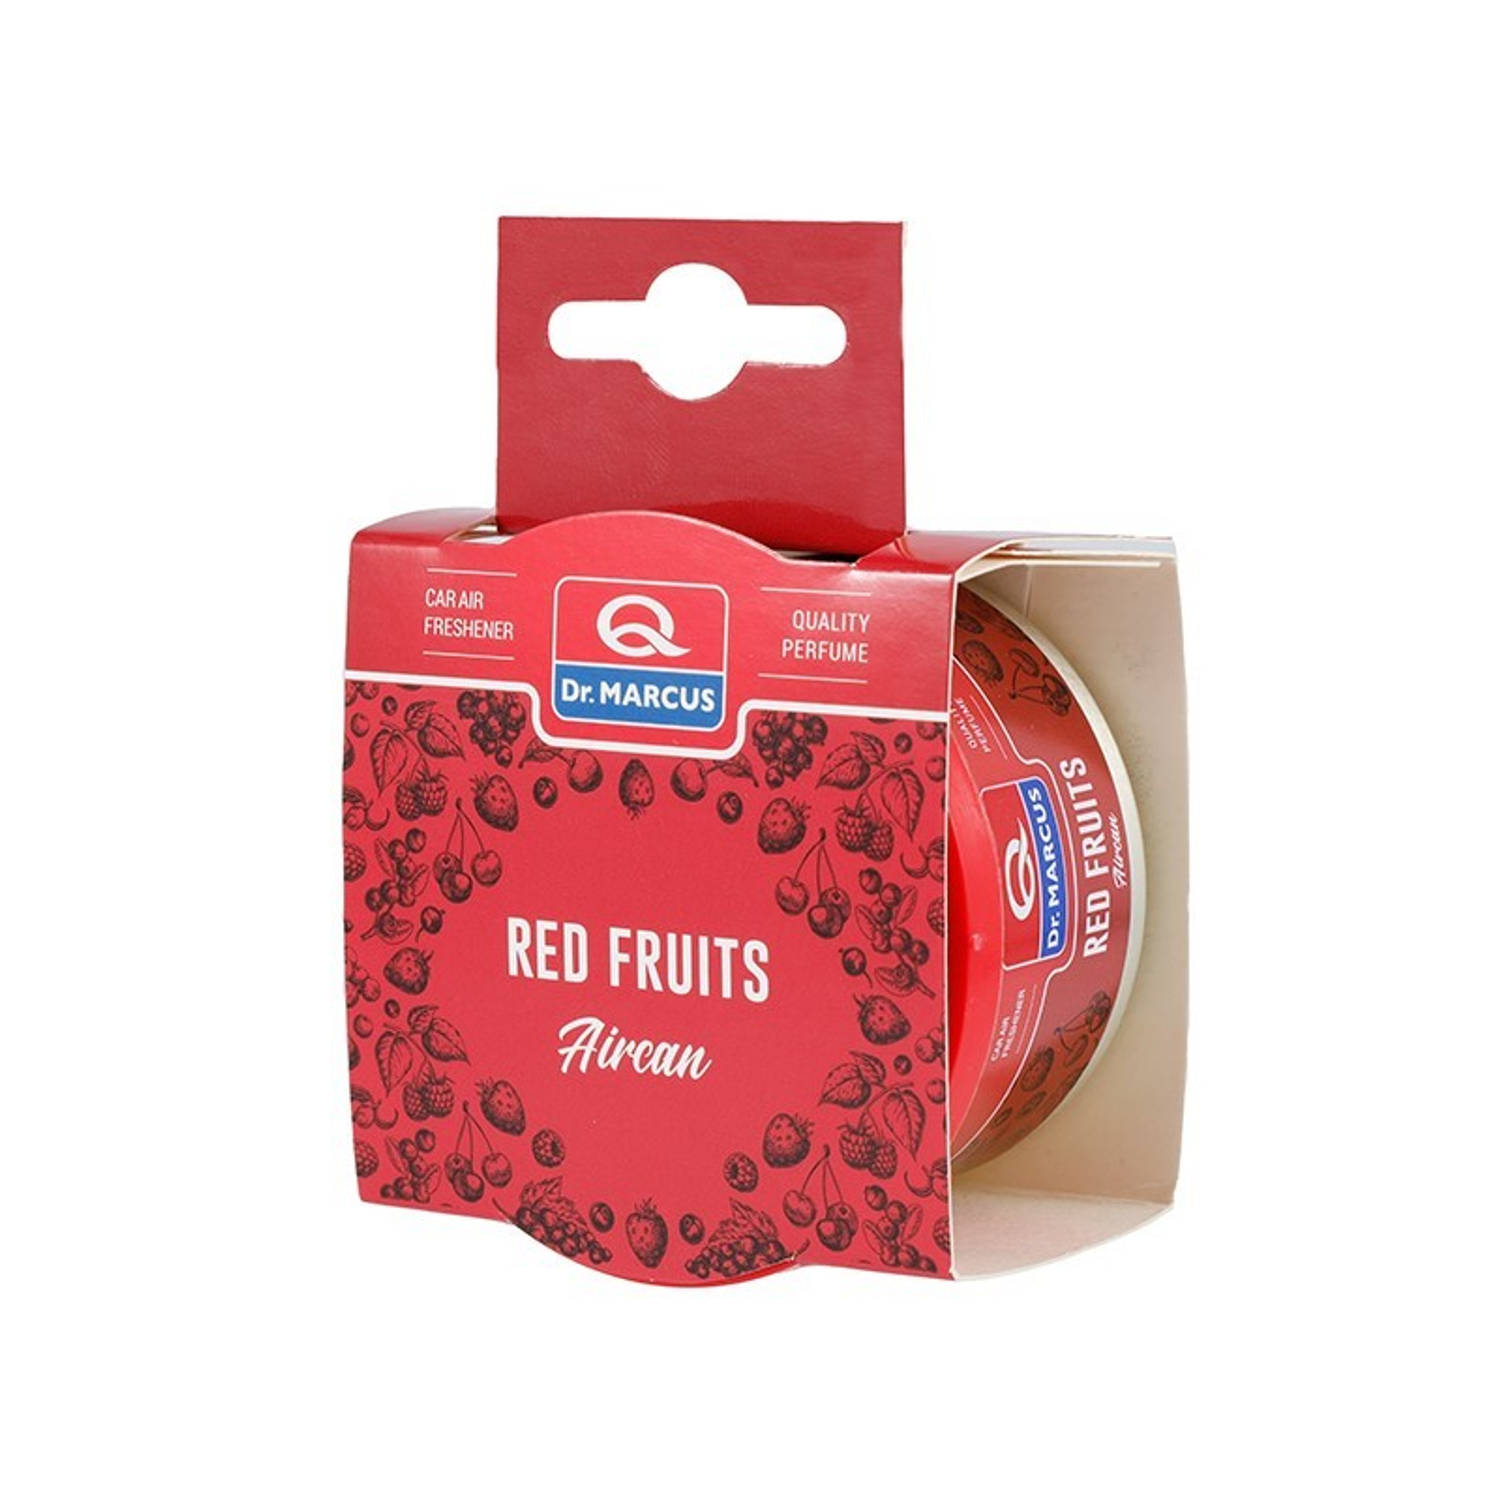 Dr. Marcus Aircan Red Fruits luchtverfrisser met neutrafresh technologie 40 gram